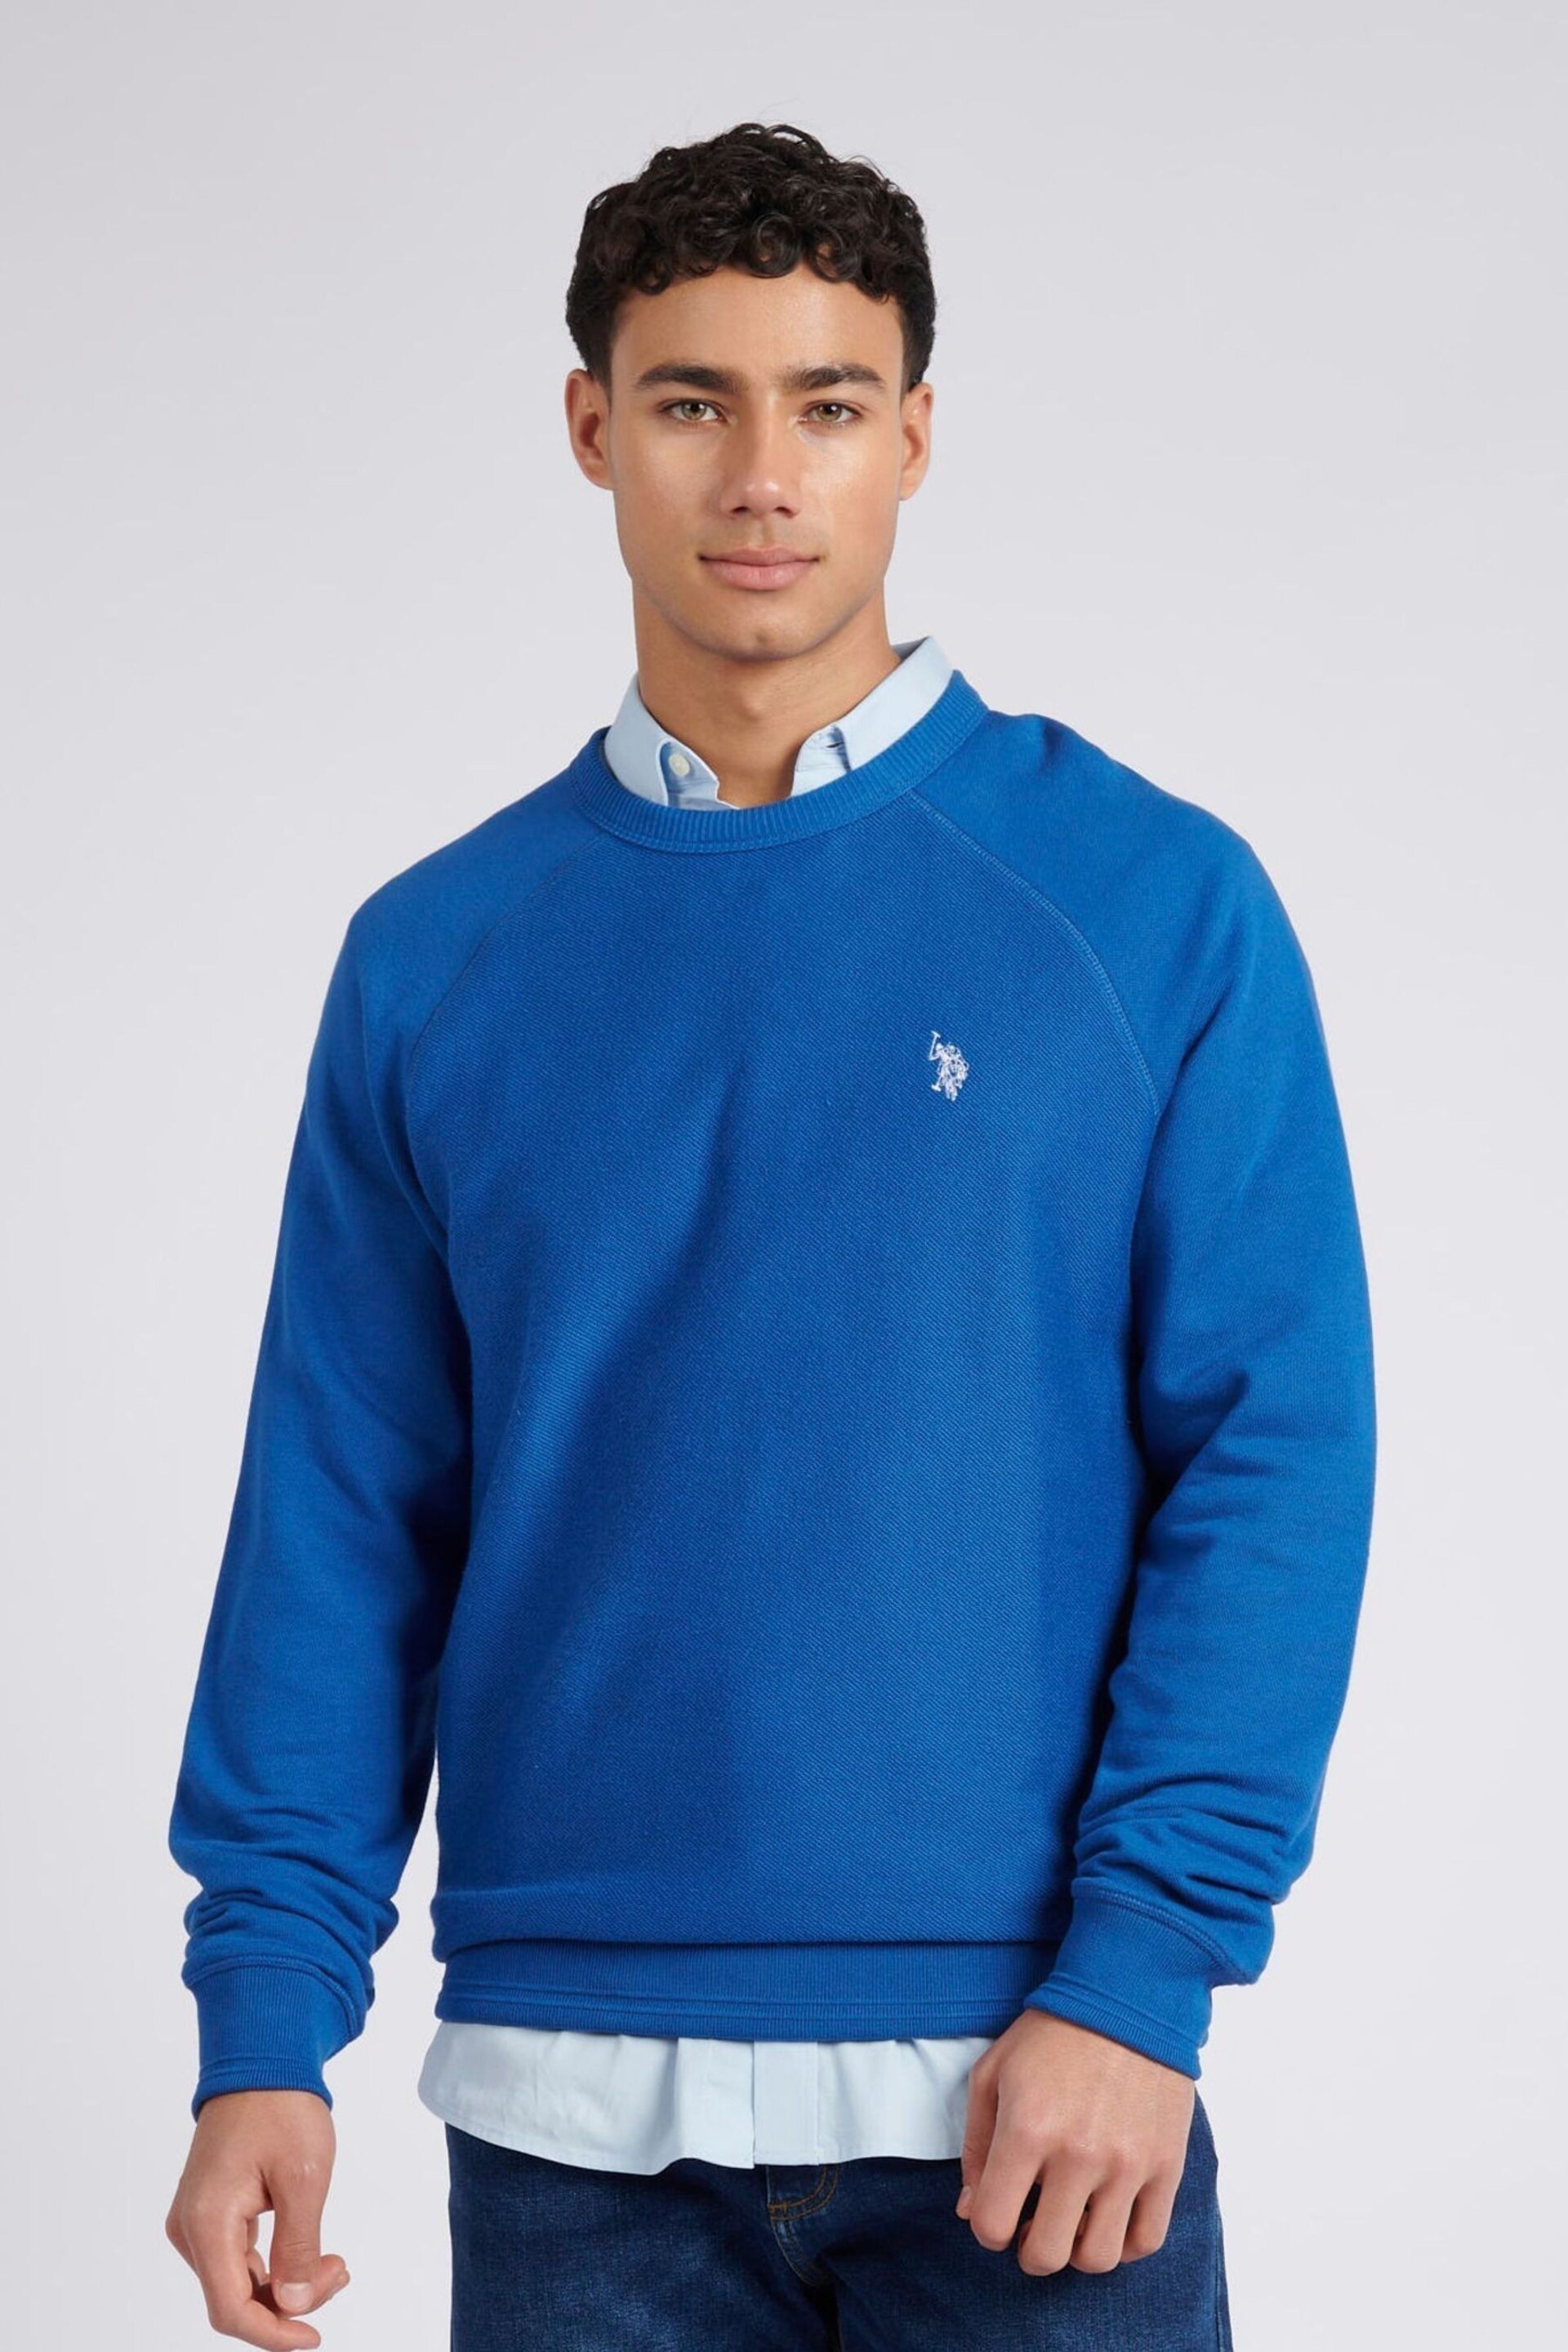 U.S. Polo Assn. Mens Blue Classic Fit Texture Reverse Sweatshirt - Image 1 of 3